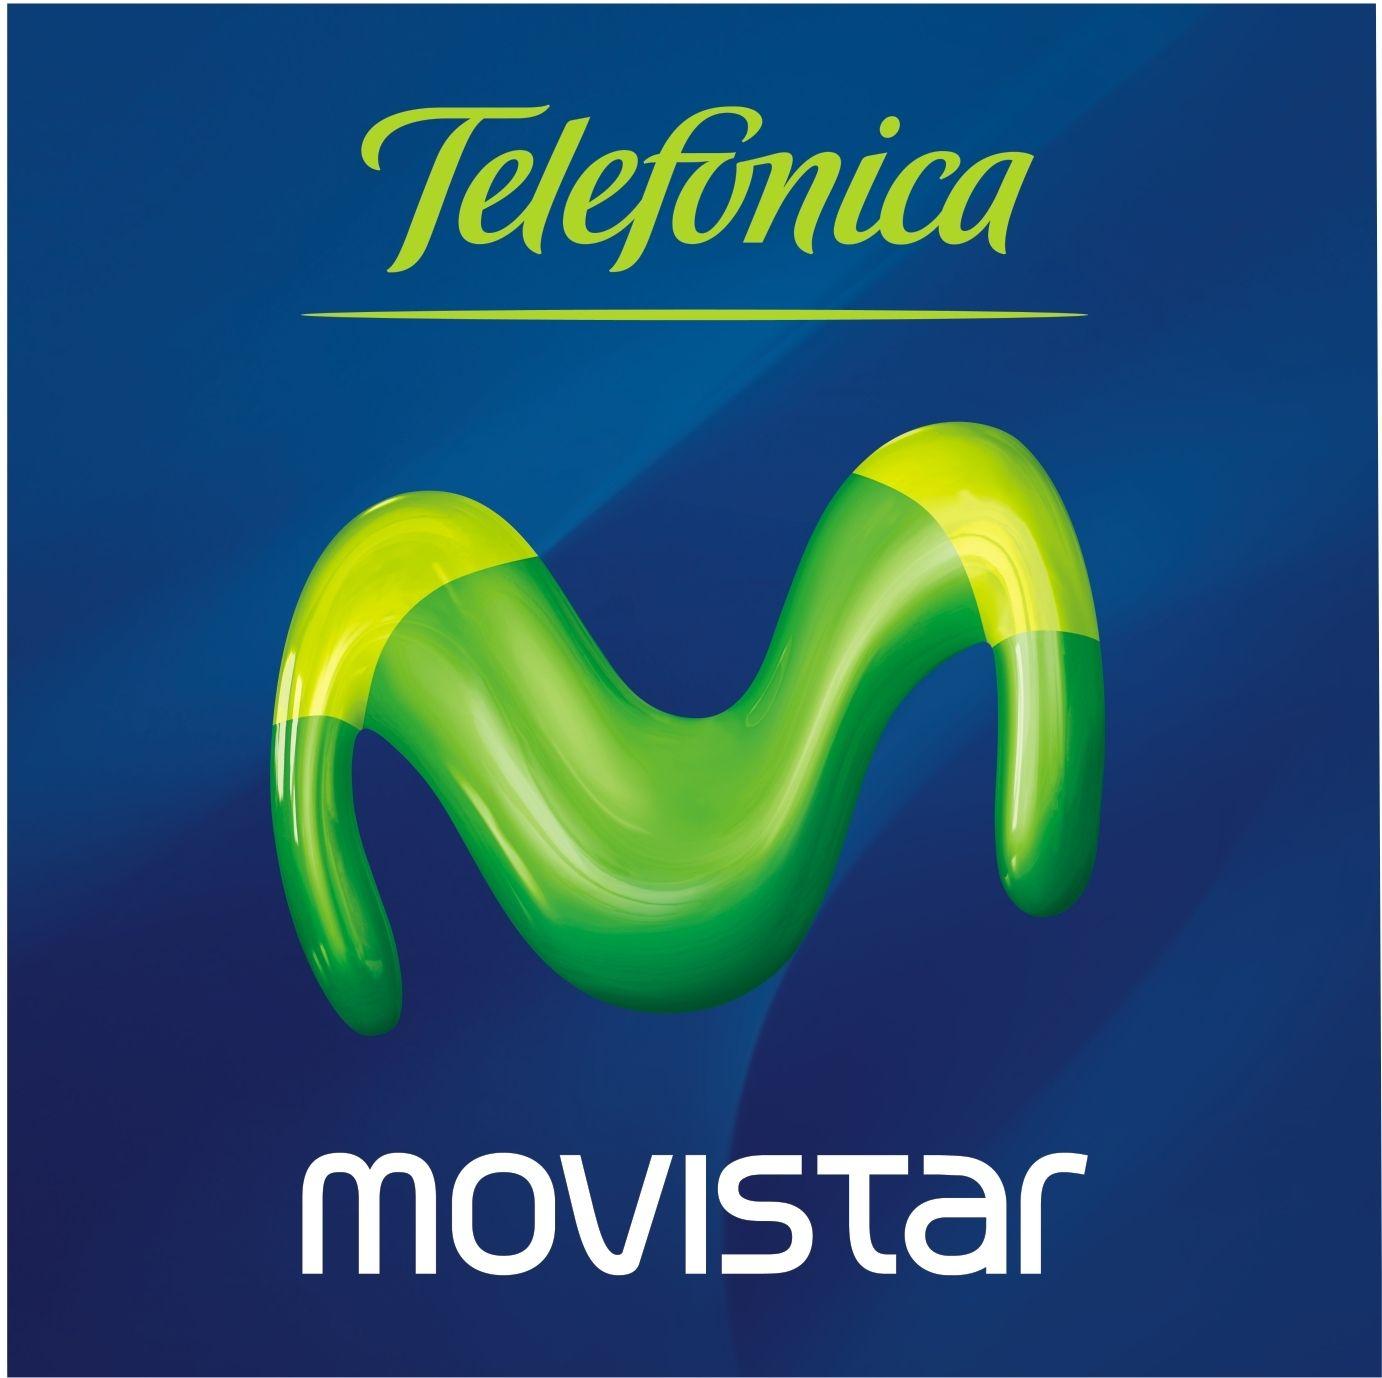 Telefonica Logo - Telefónica | Logopedia | FANDOM powered by Wikia